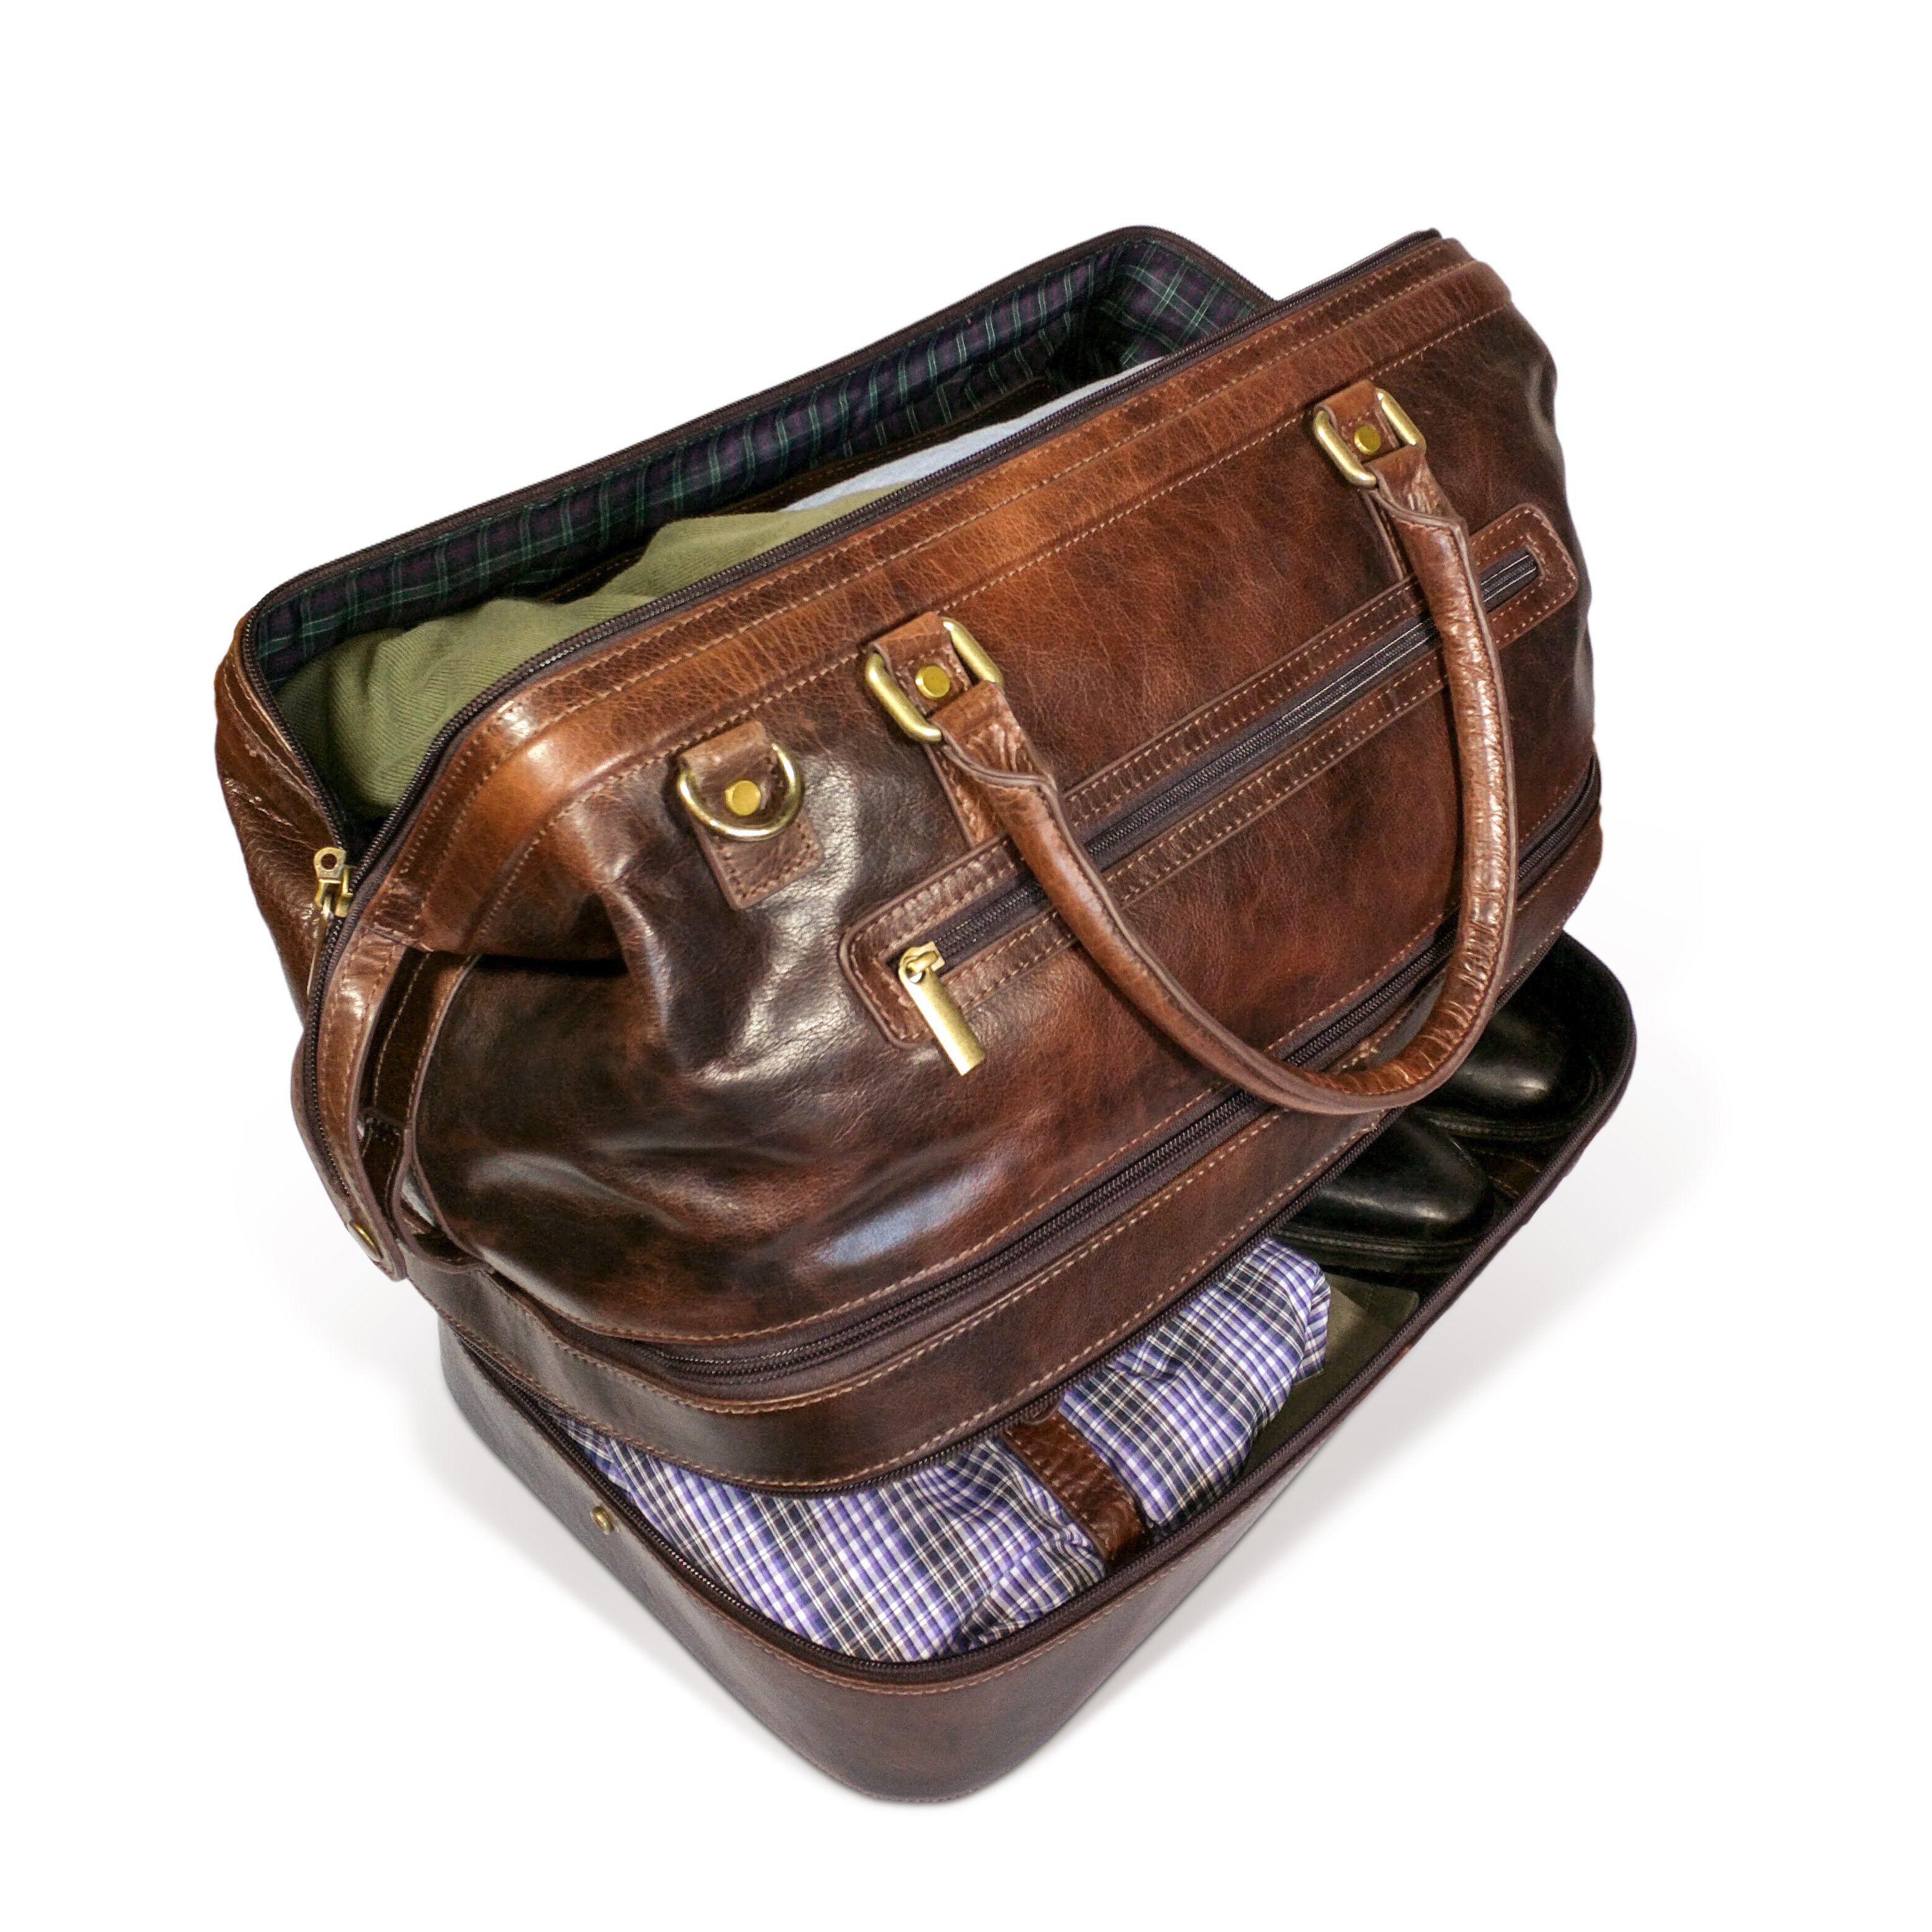 Multi Compartment Handbag with Adjustable Shoulder Strap. Black. Style No:  3265. | eBay